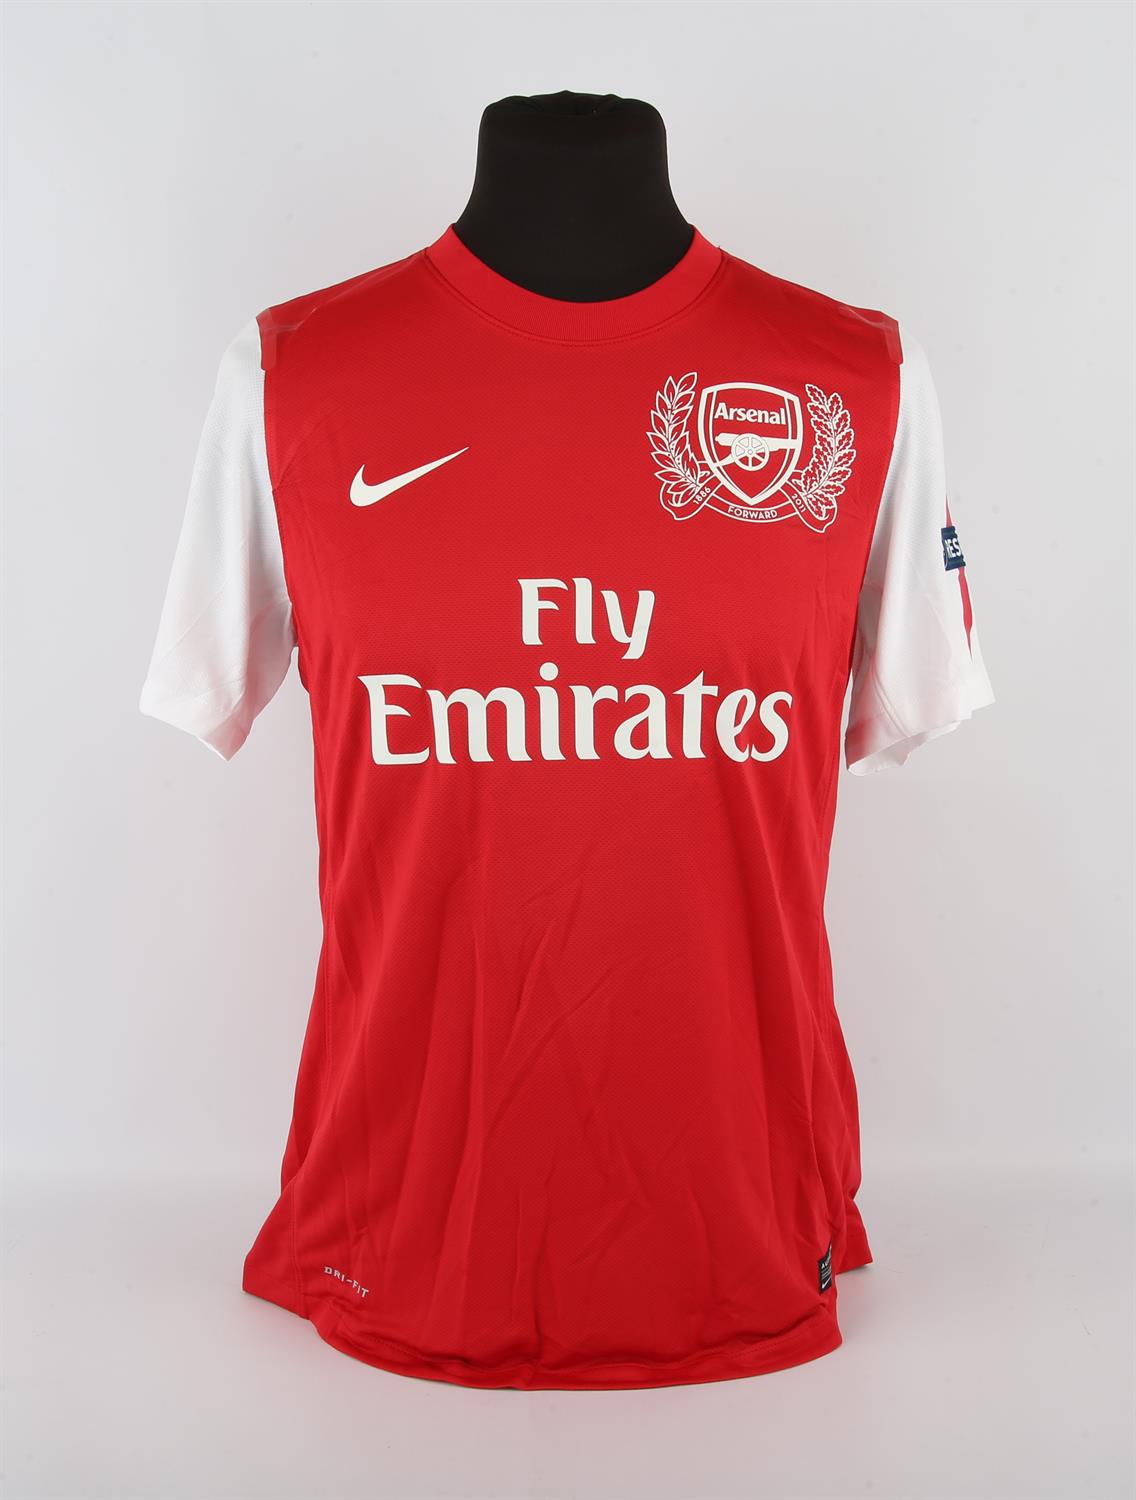 Arsenal Football club, Jenkinson (No.25) 2011 - 2012 shirt. Worn during season. Provenance Arsenal - Image 2 of 2